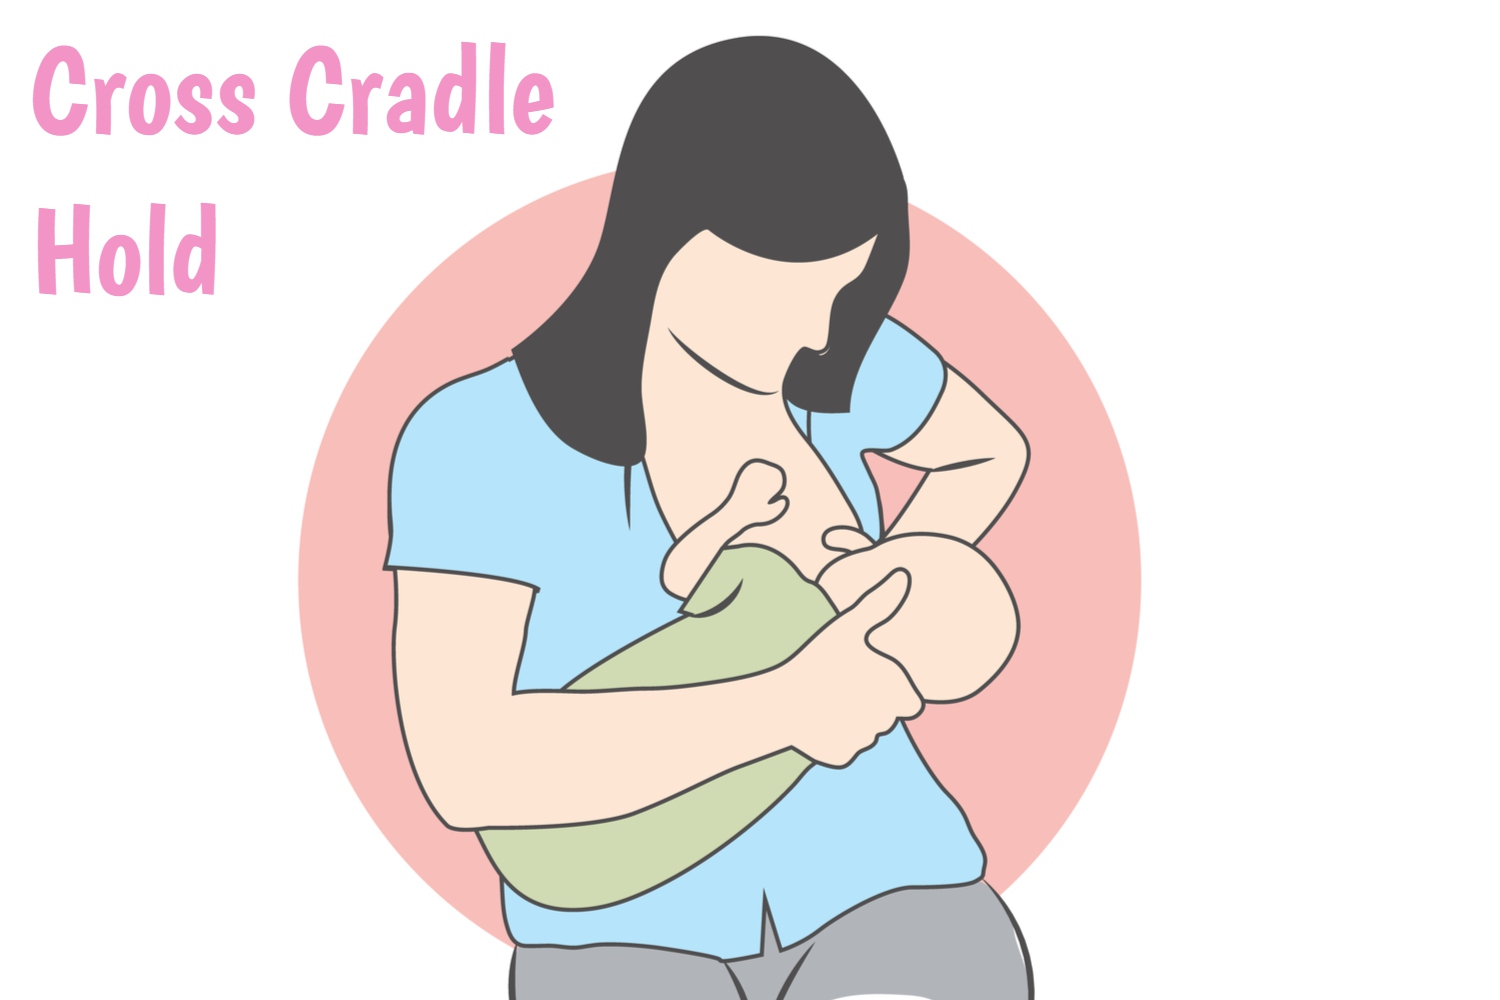 Cross cradle hold